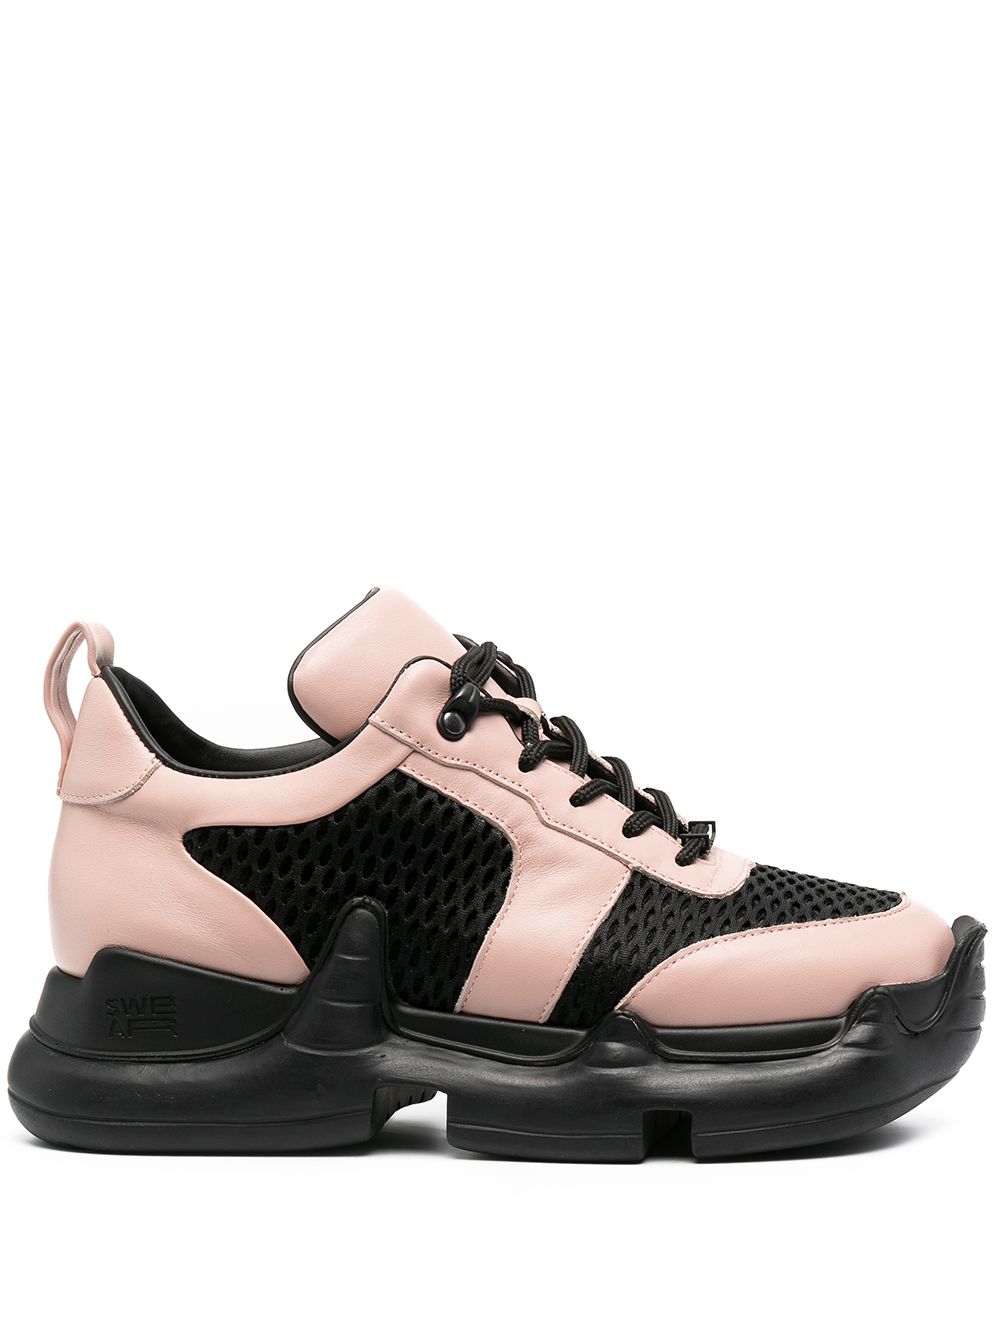 SWEAR Air Revive Nitro S sneakers - Pink von SWEAR